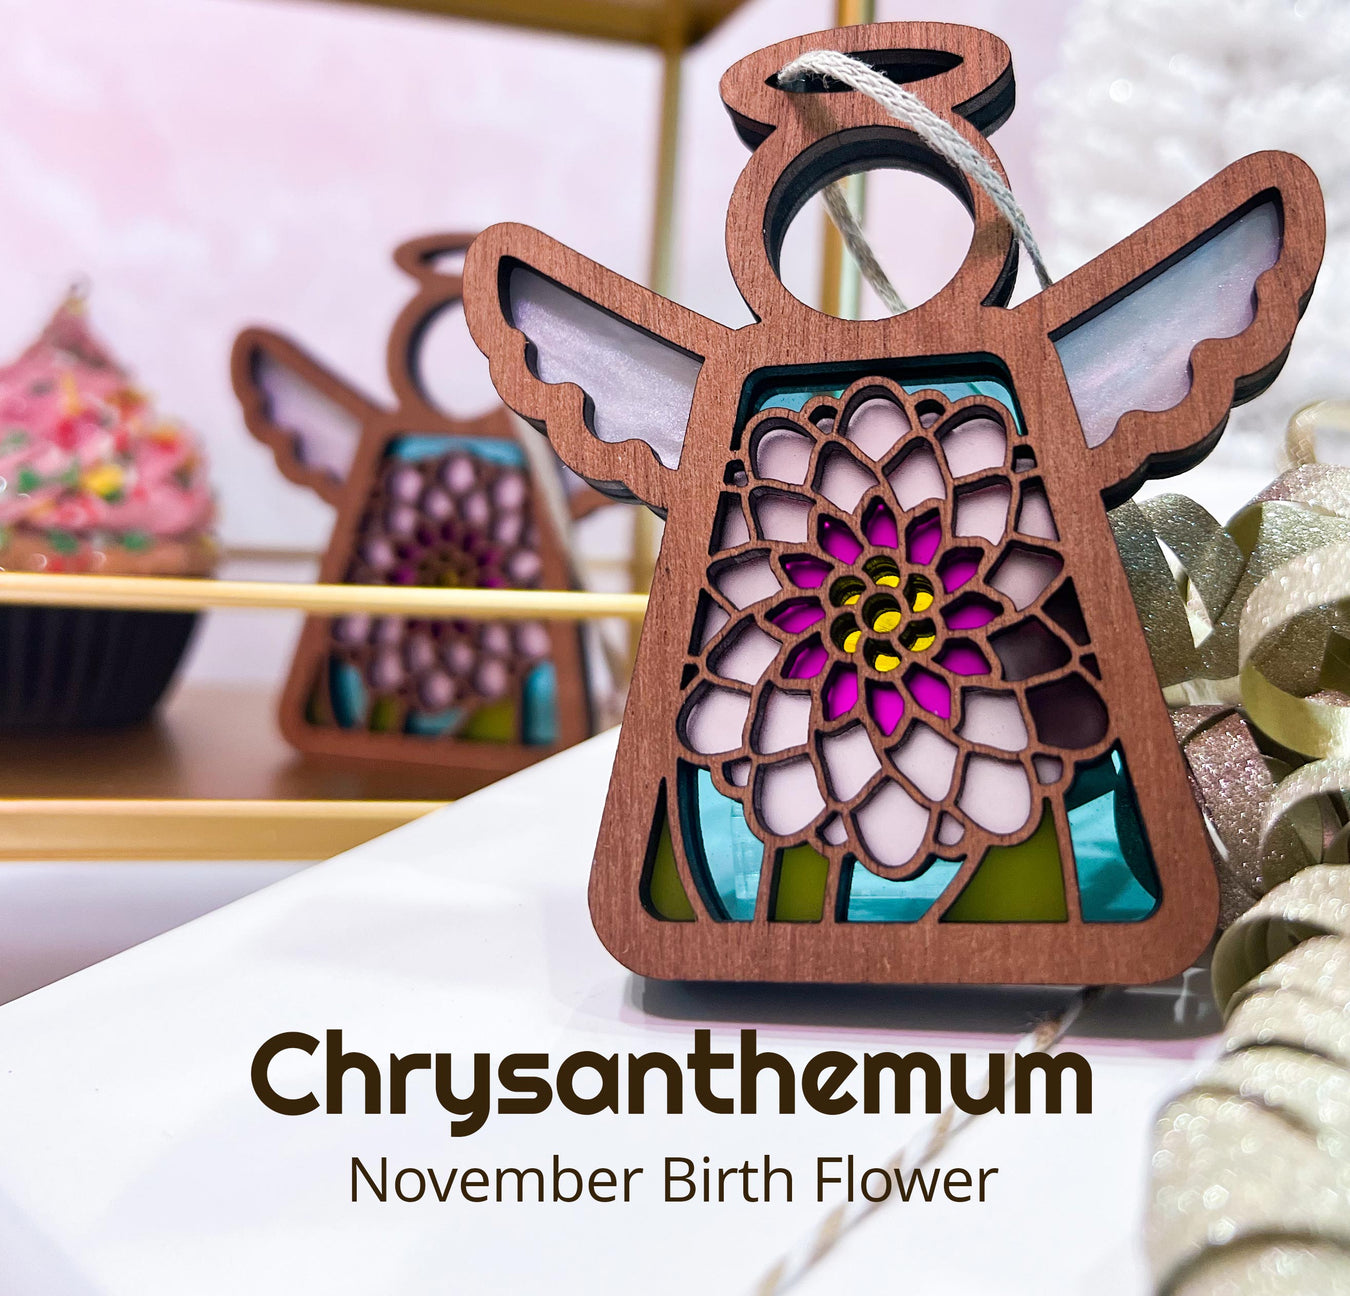 Chrysanthemum. The birth month flower for November.